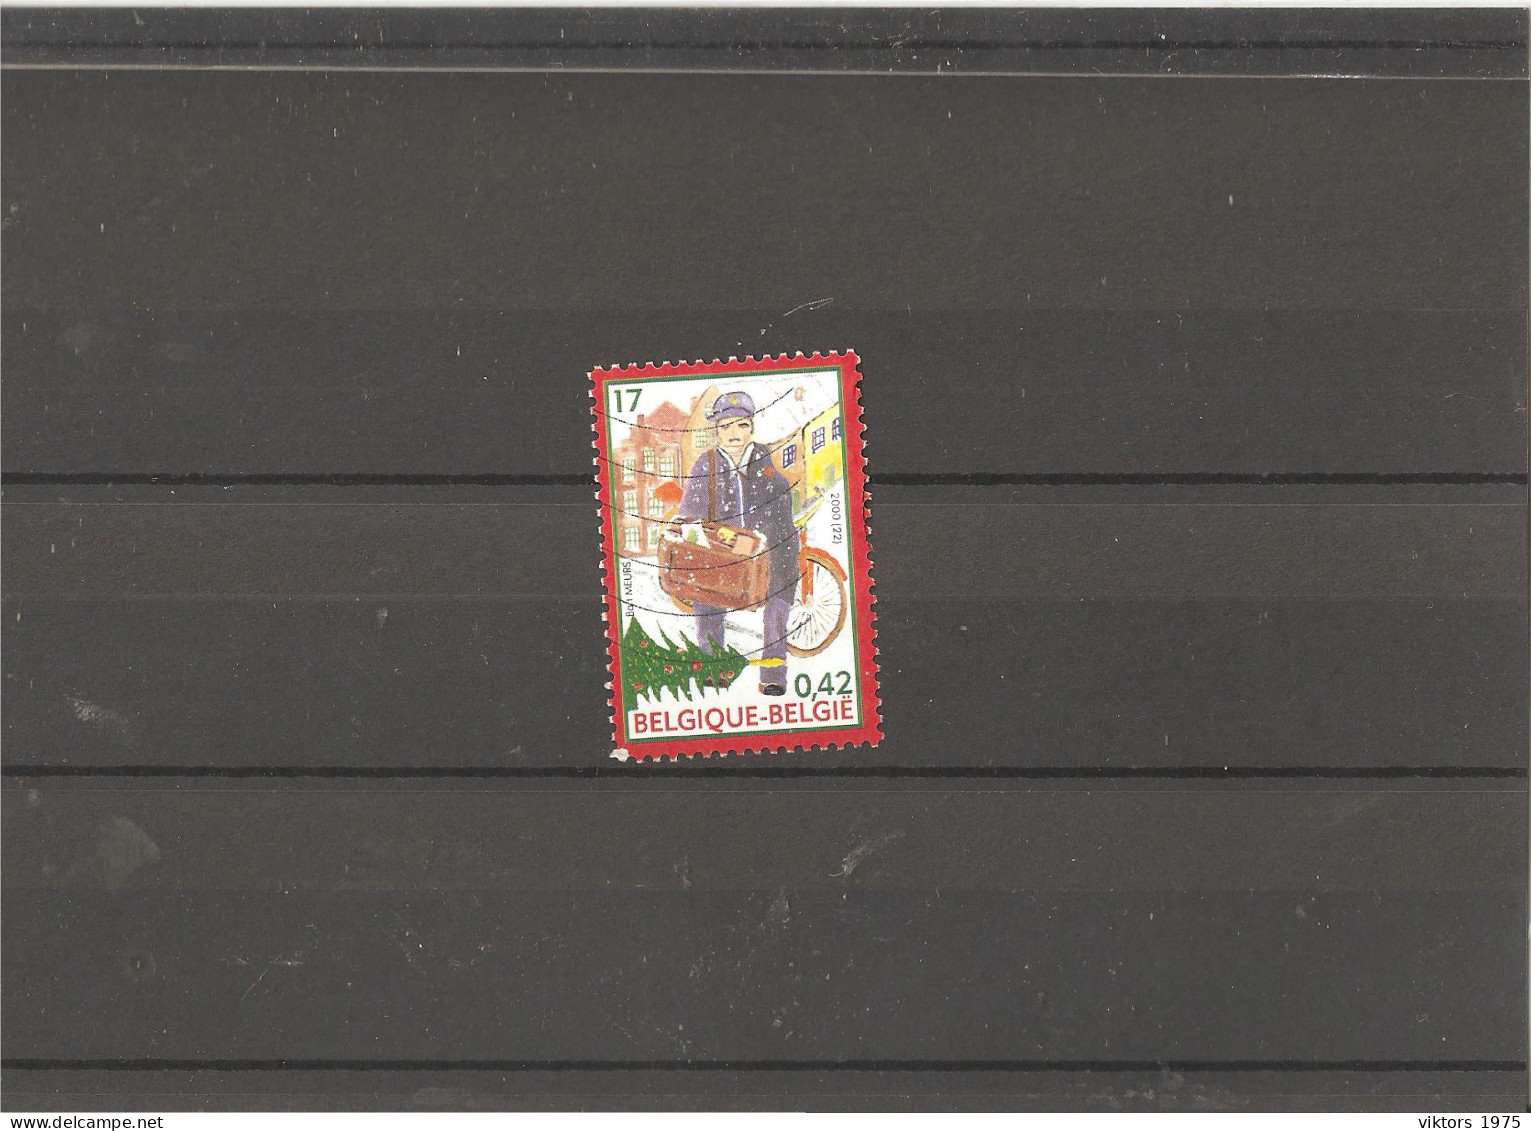 Used Stamp Nr.2993 In MICHEL Catalog - Gebraucht